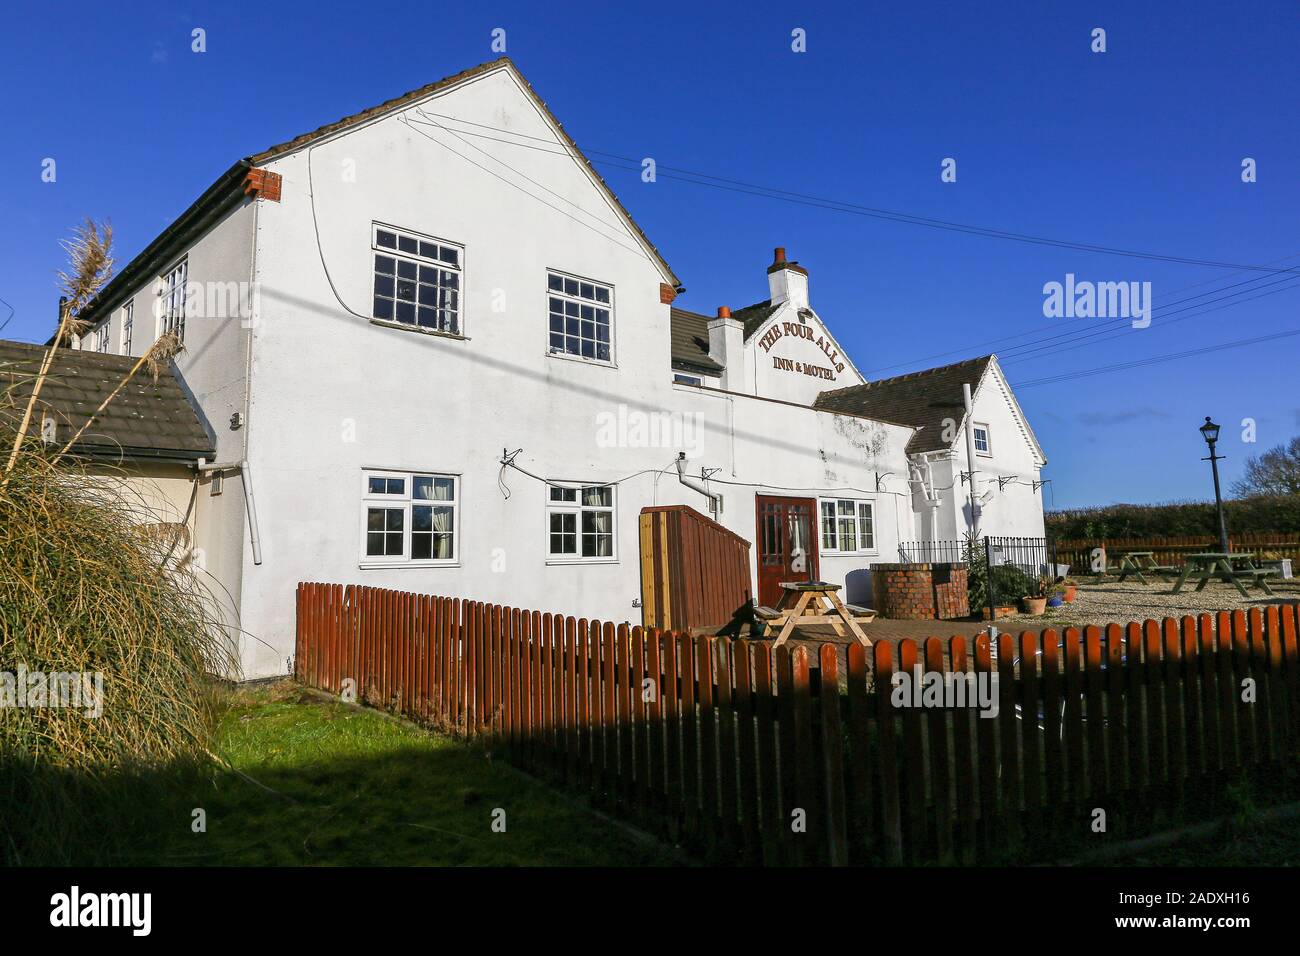 The Four Alls Inn public house or pub, Woodseaves, Market Drayton, Shropshire, England, UK Stock Photo